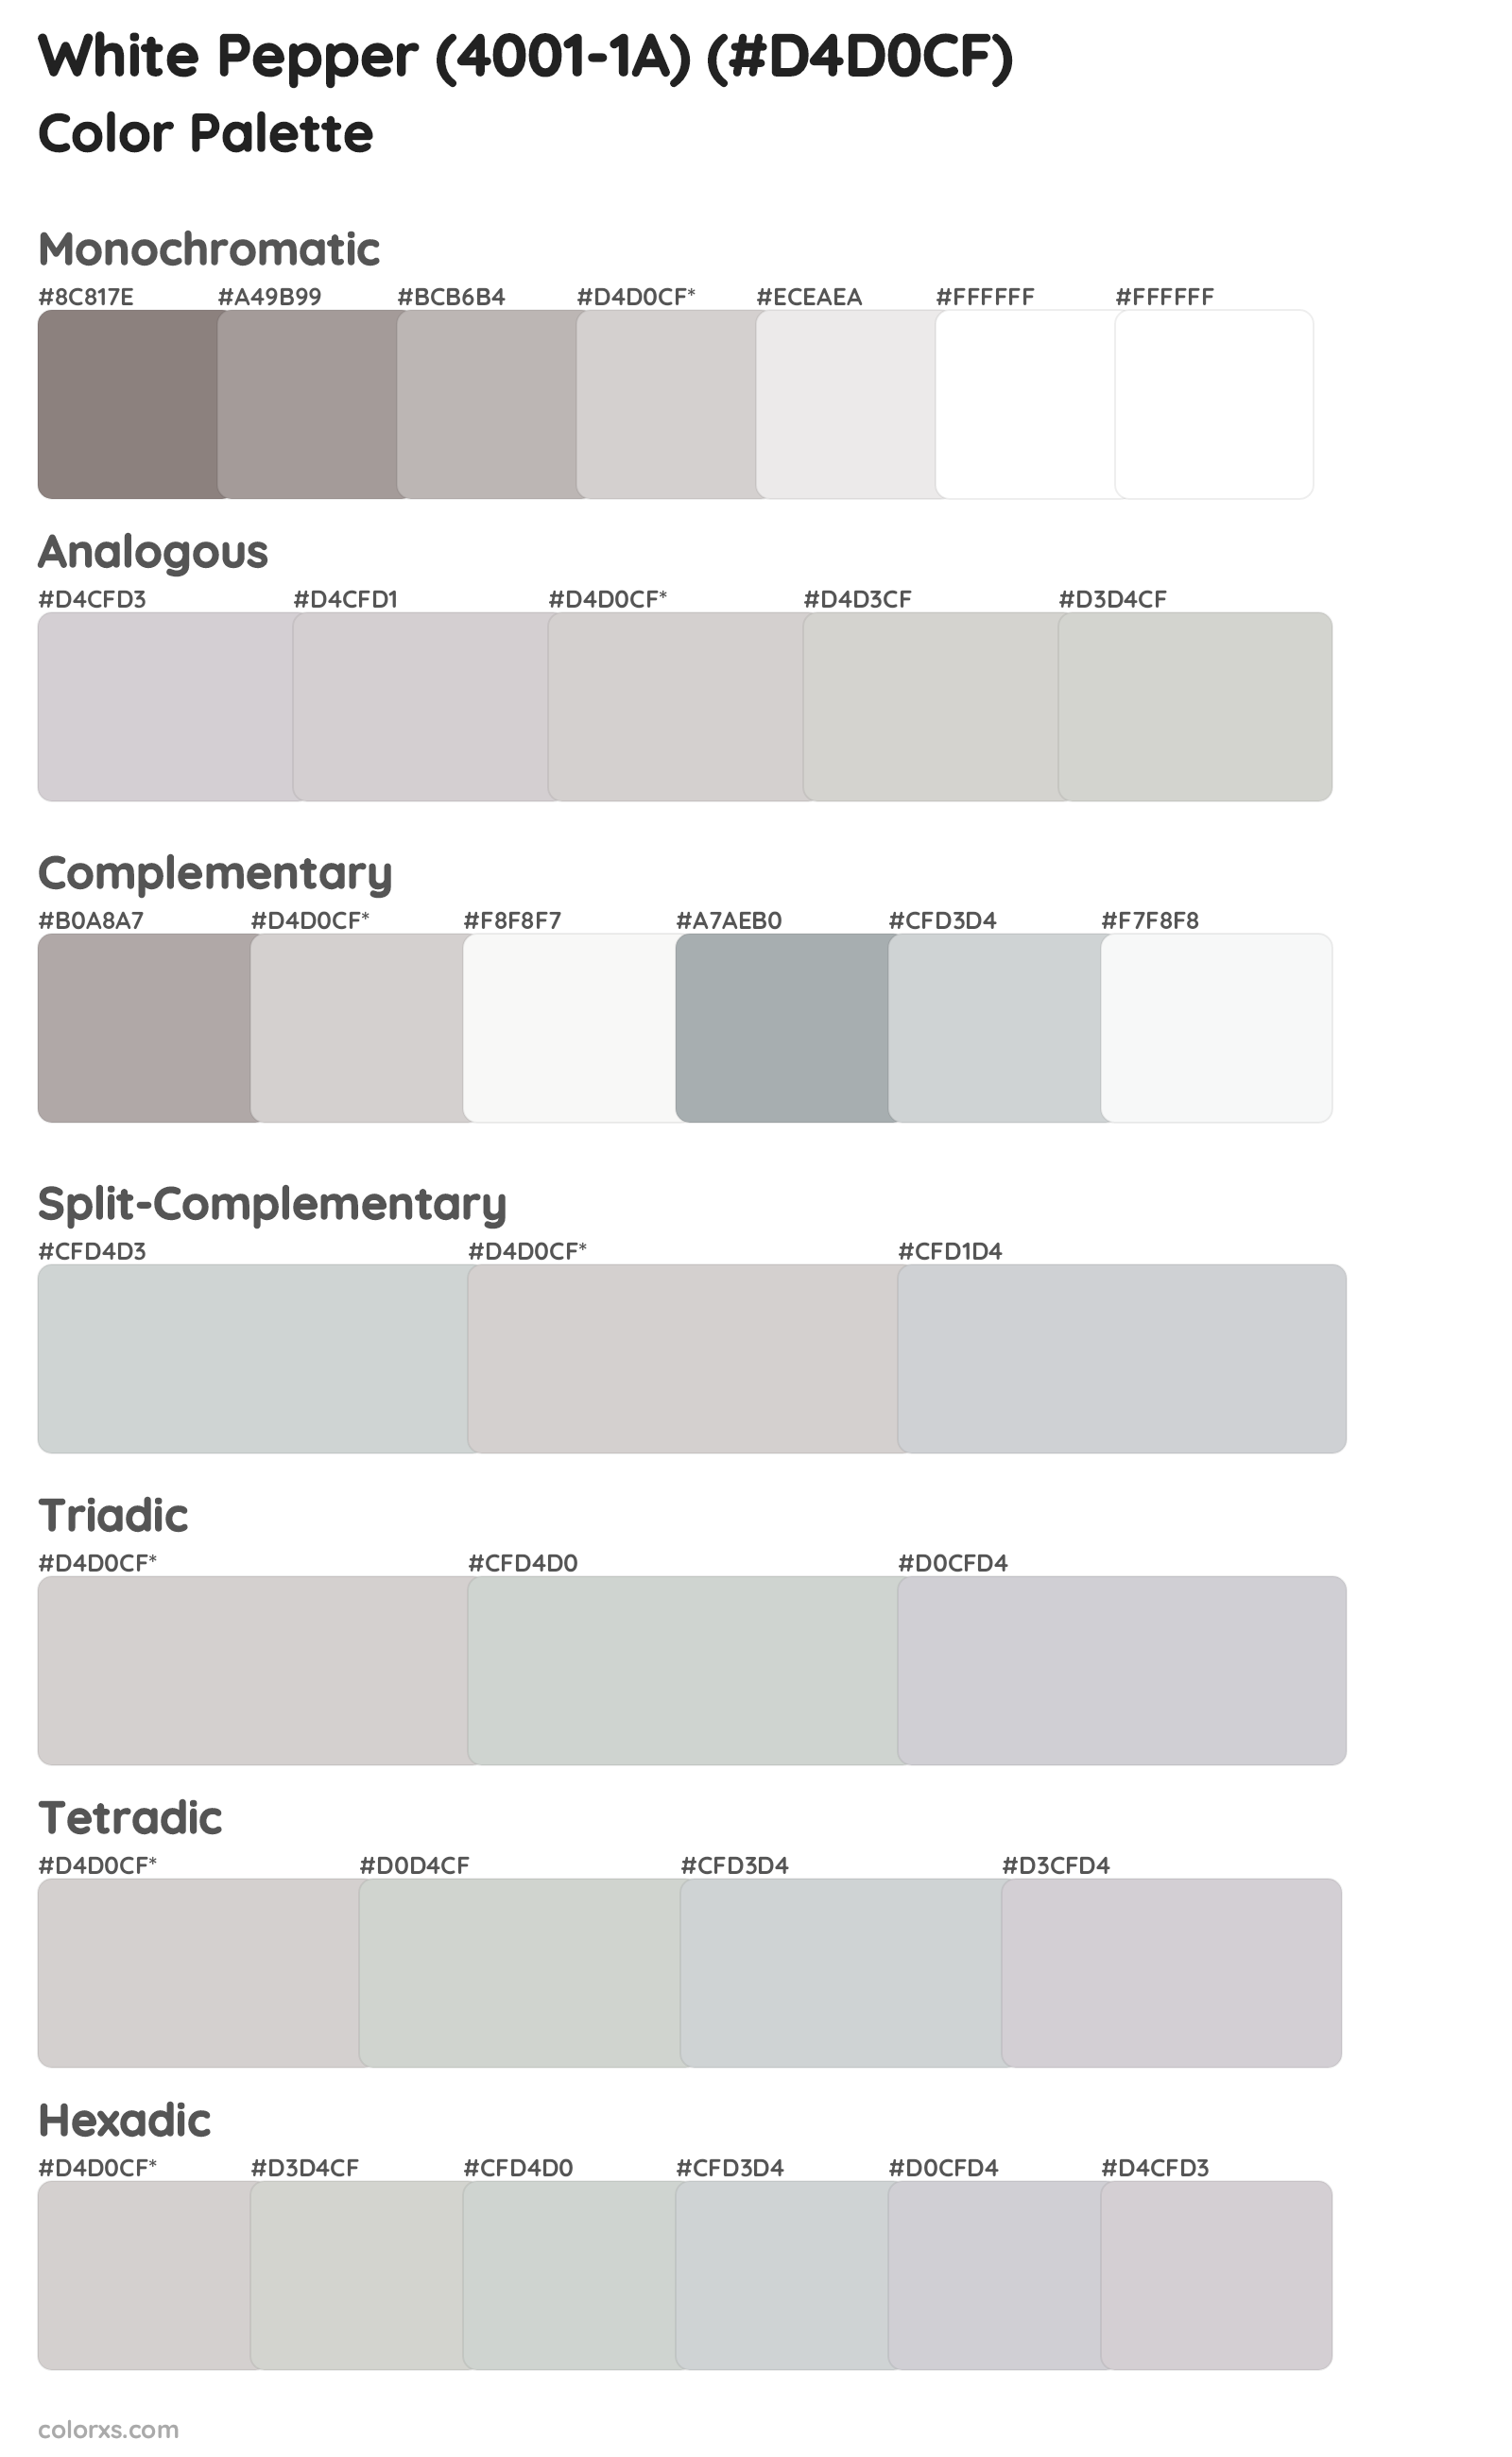 White Pepper (4001-1A) Color Scheme Palettes